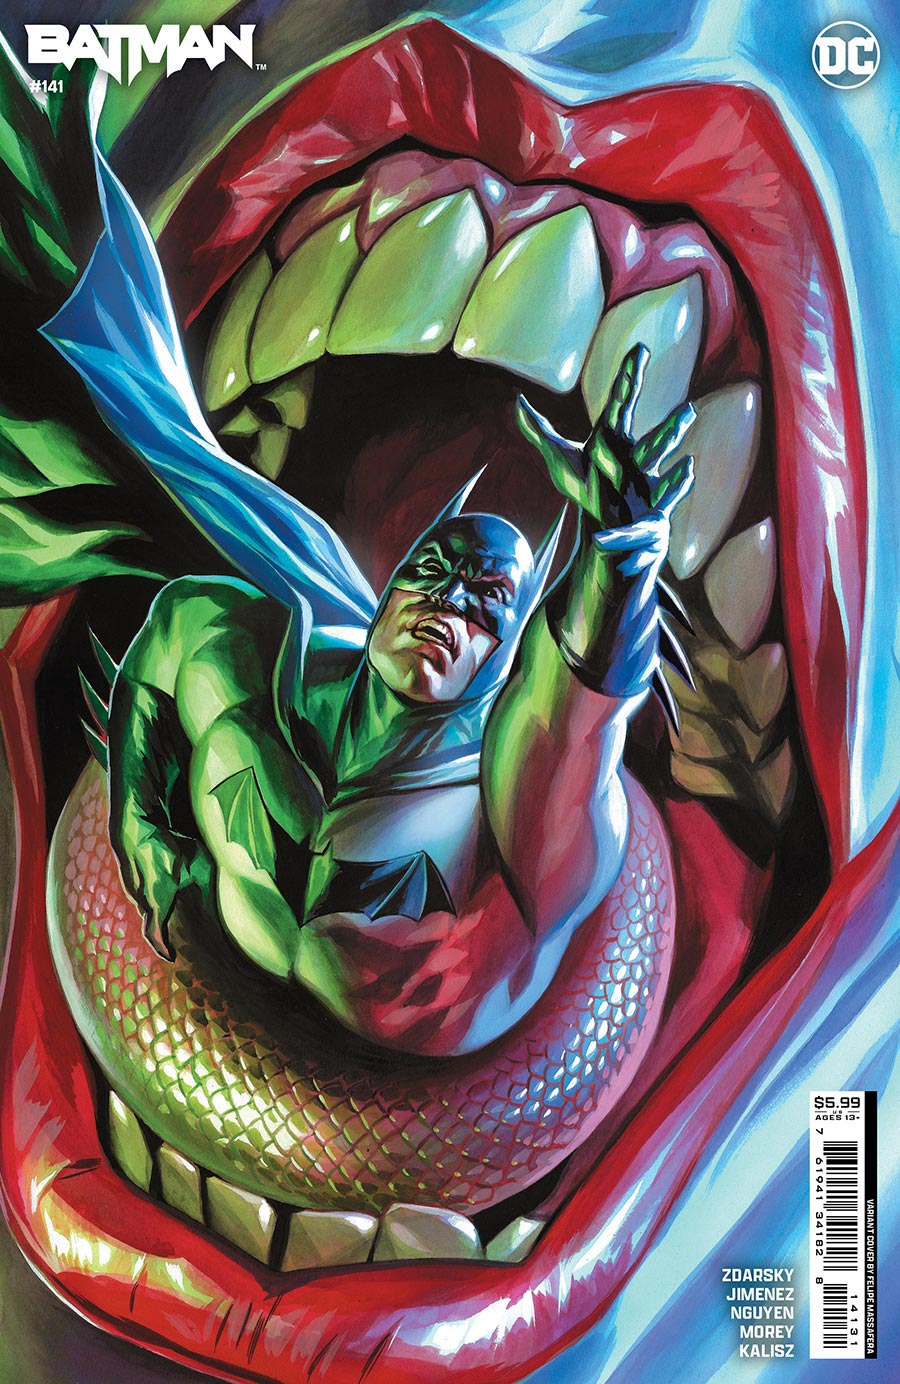 Batman Vol 3 #141 Cover C Variant Felipe Massafera Card Stock Cover